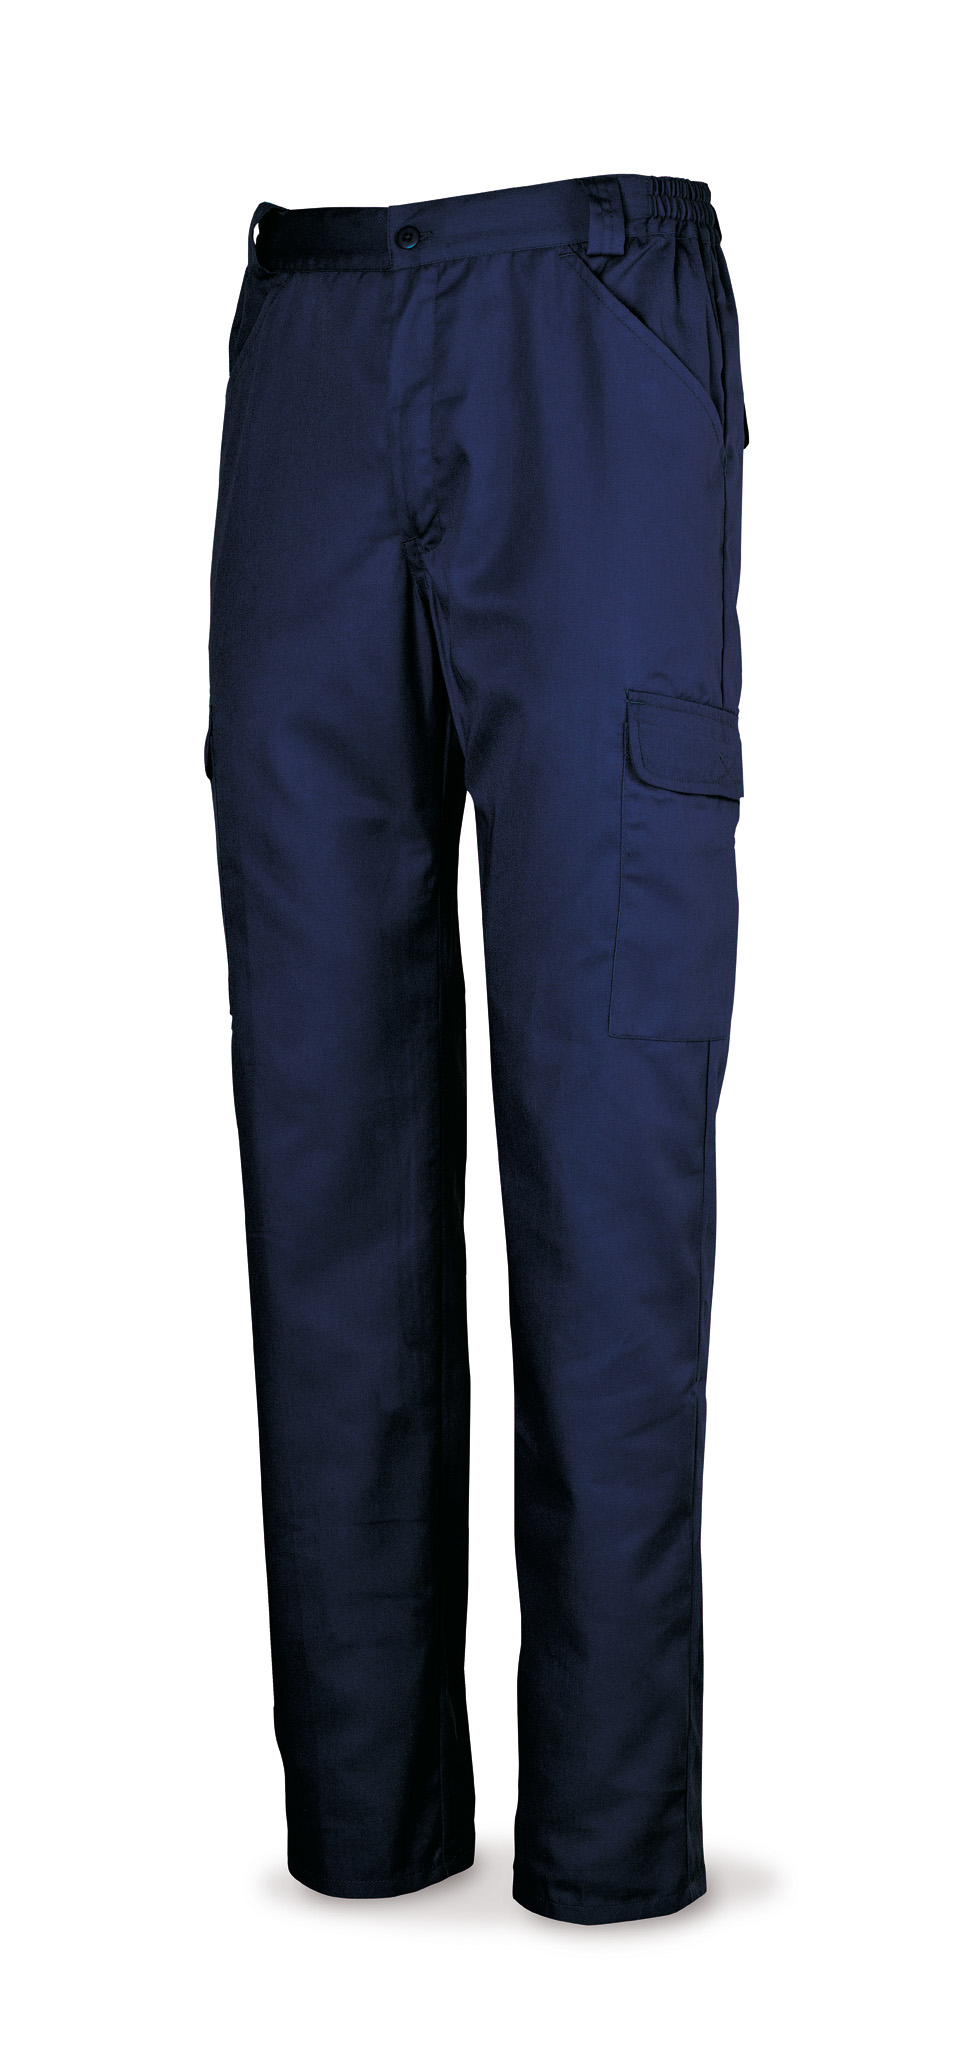 388-PEAM Vestuario Laboral Serie Básica Pantalón azul marino algodón 200 g. Multibolsillos.